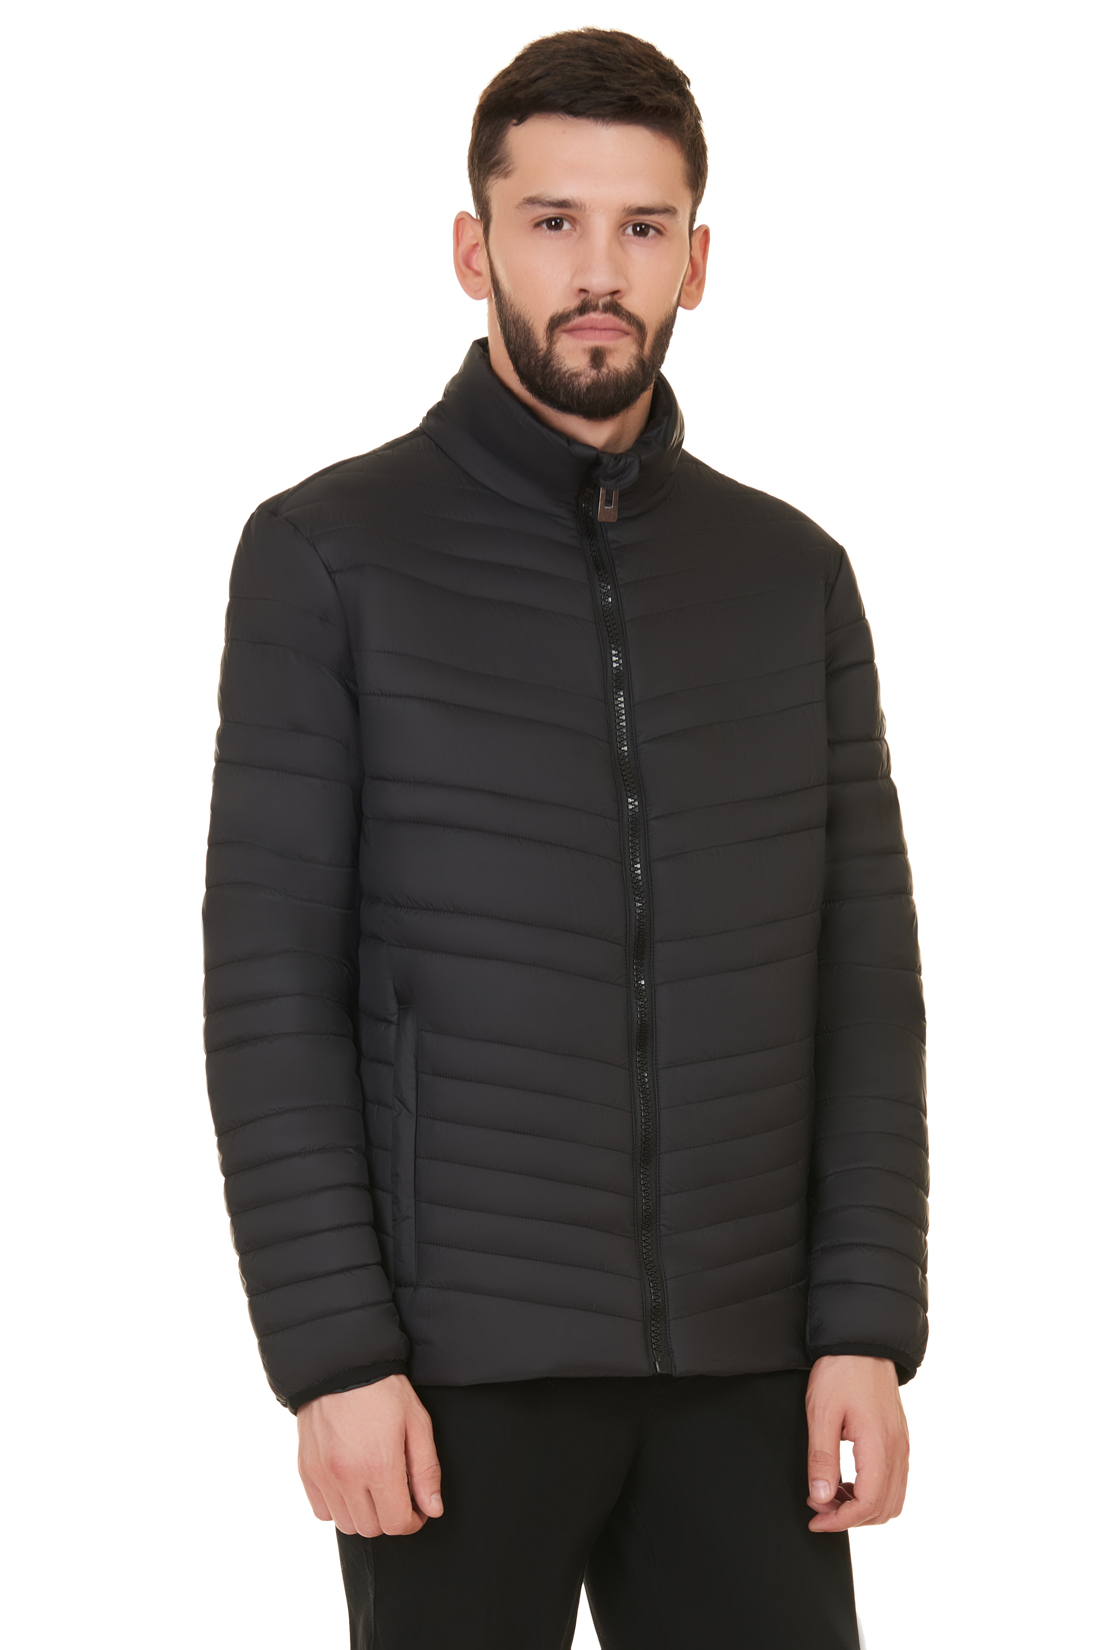 Куртка с наклонной простёжкой (арт. baon B537522), размер XXL, цвет черный Куртка с наклонной простёжкой (арт. baon B537522) - фото 1